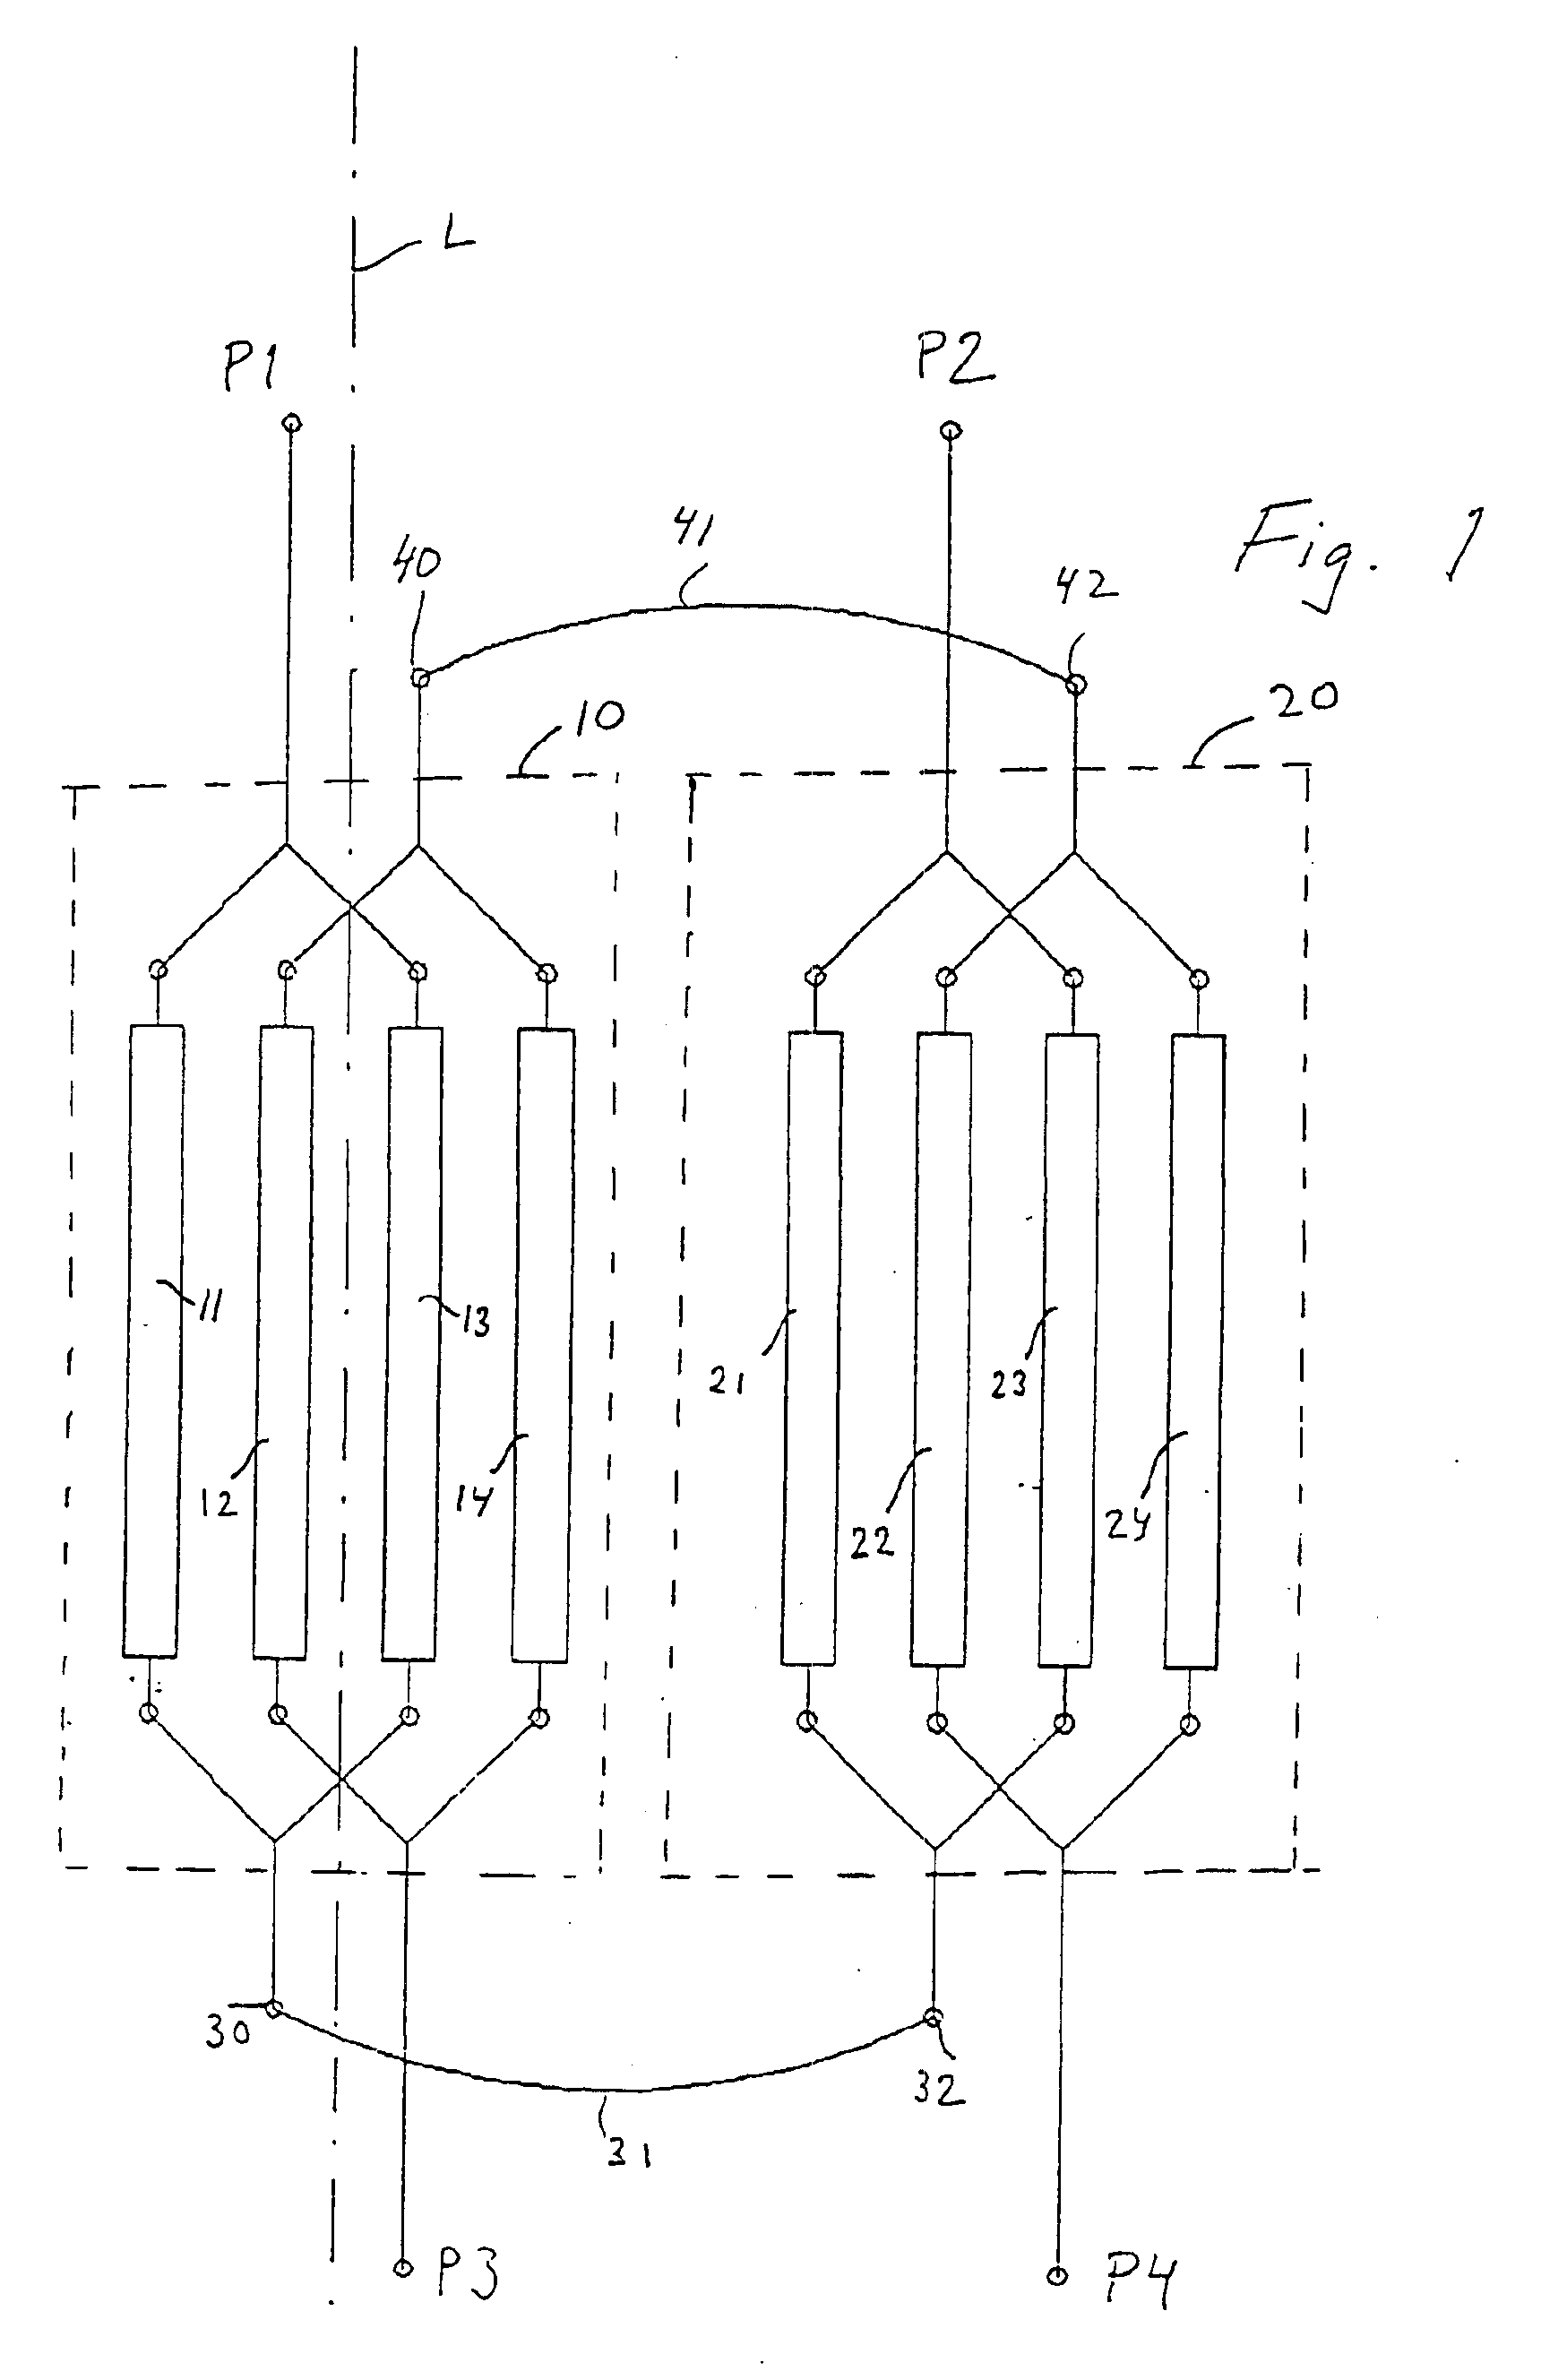 Four port hybrid microstrip circuit of Lange type